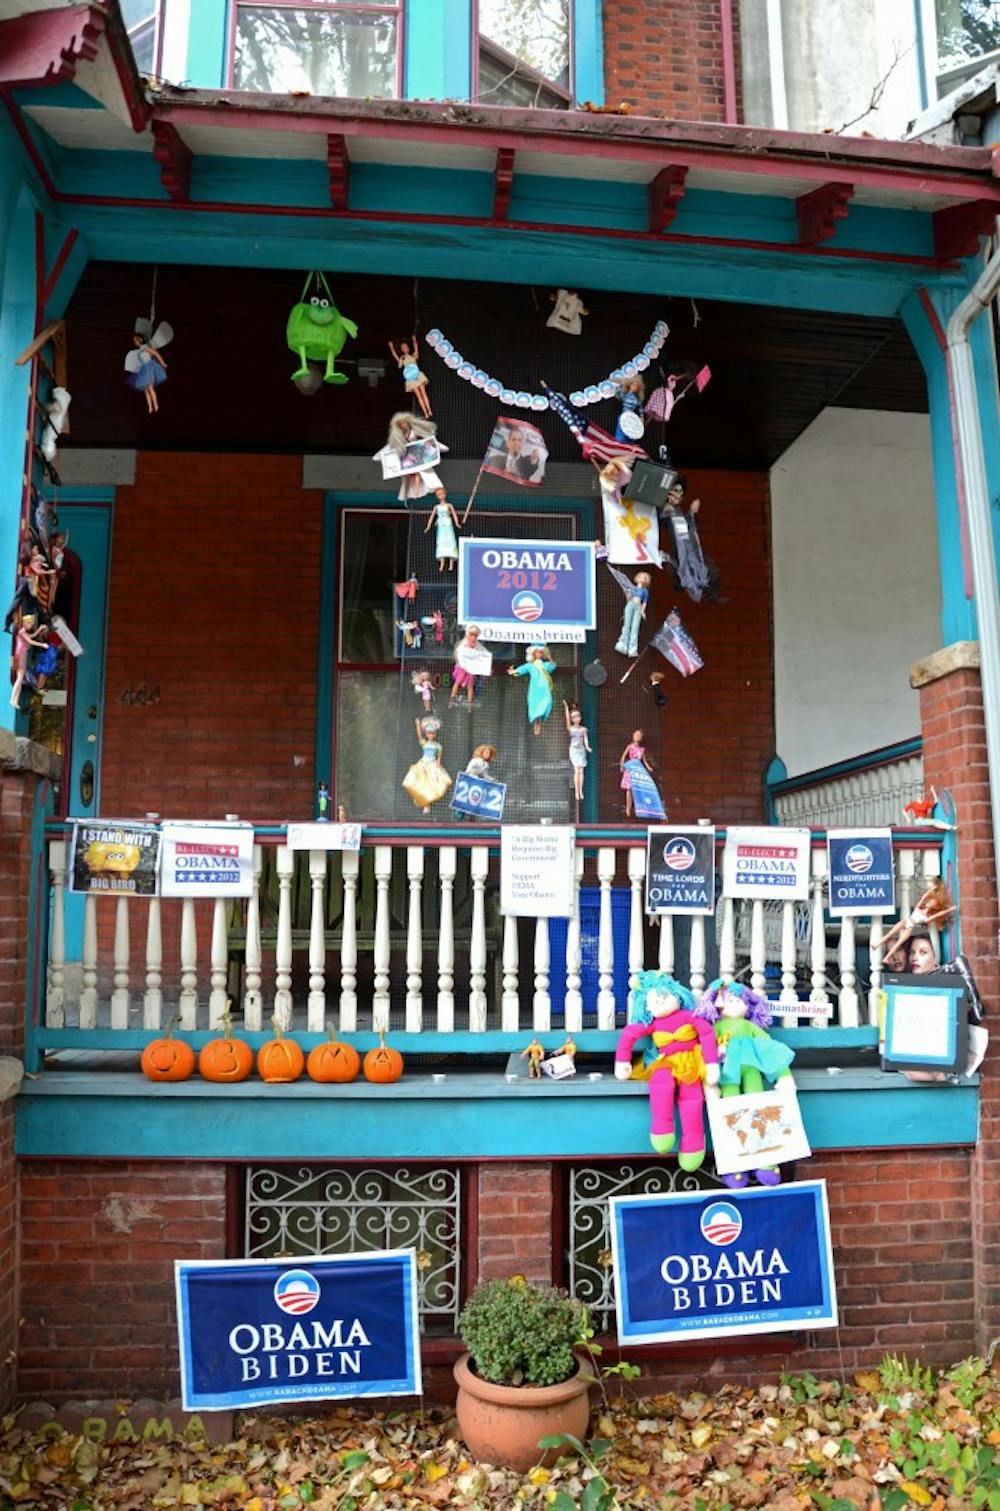 43rd Street residents dedicate their porch to an Obama Shrine